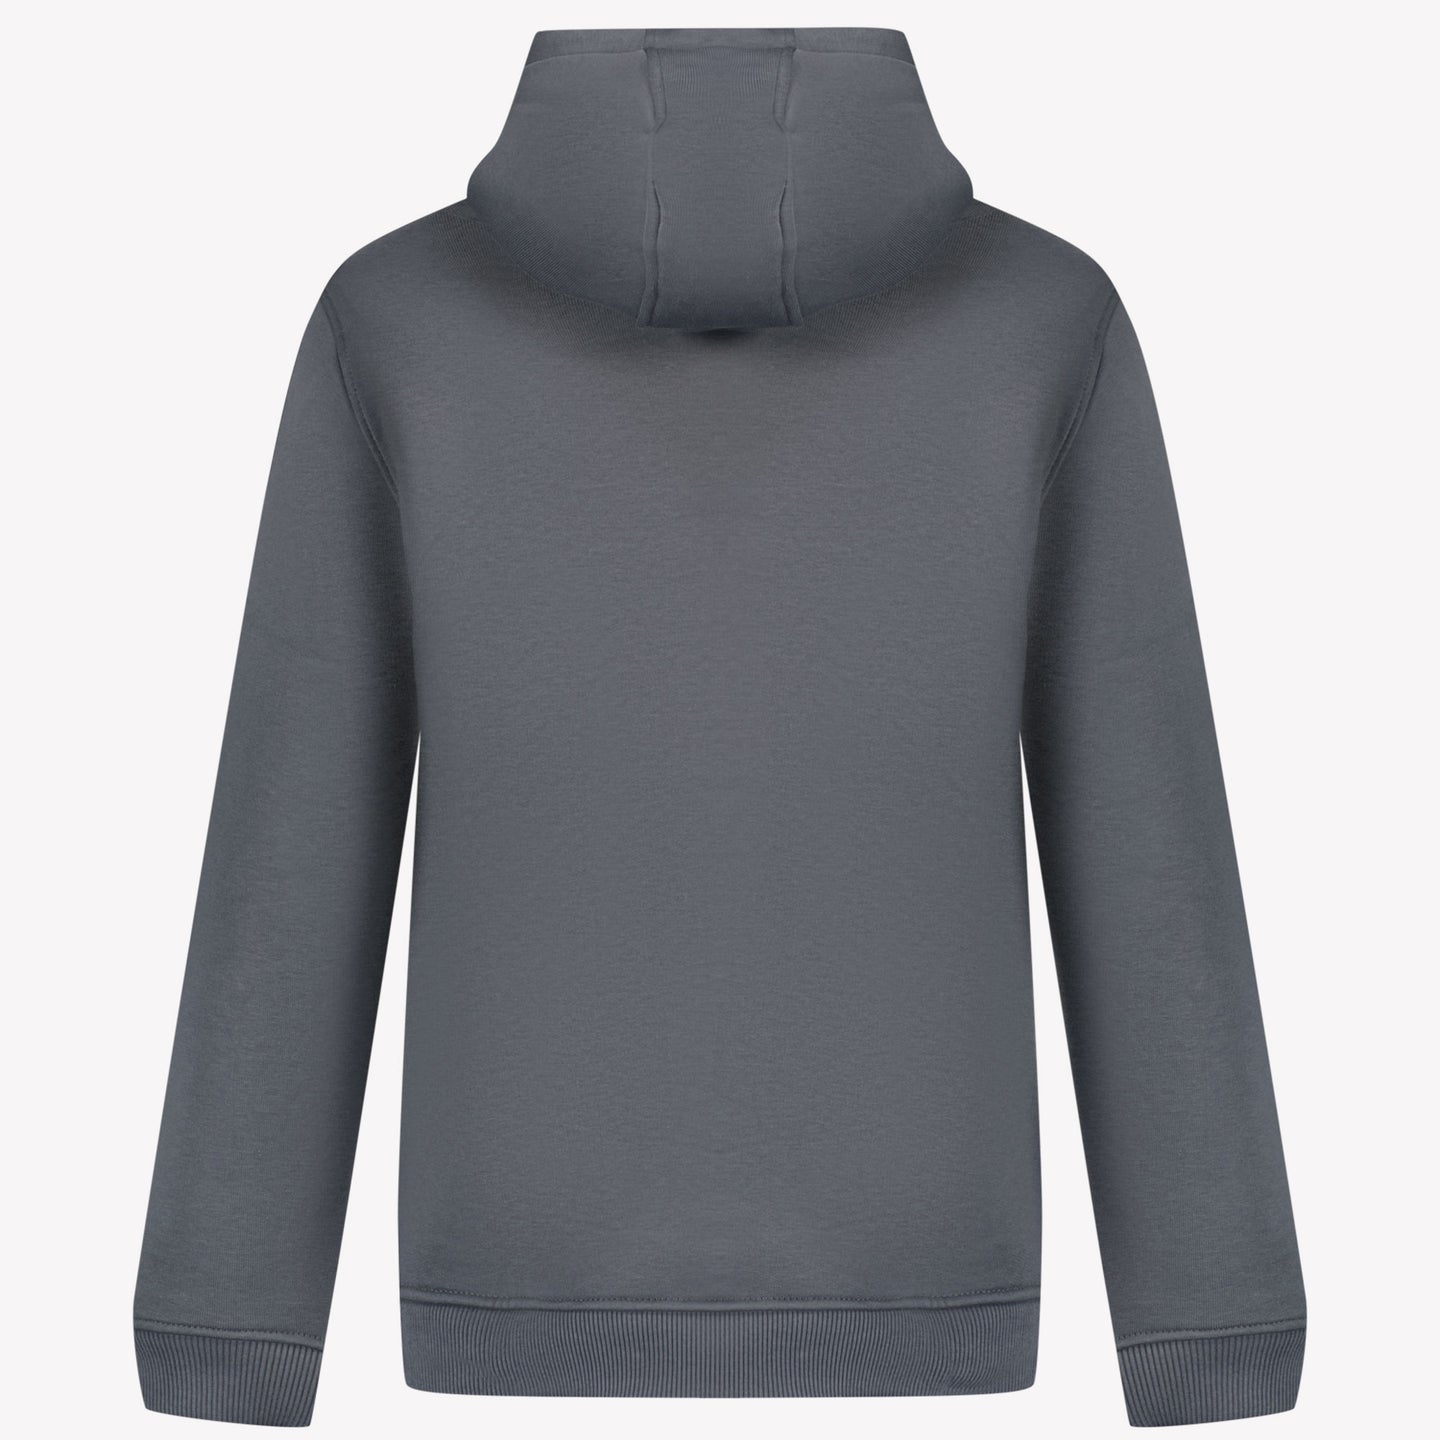 Malelions unisex sweater Dark Gray